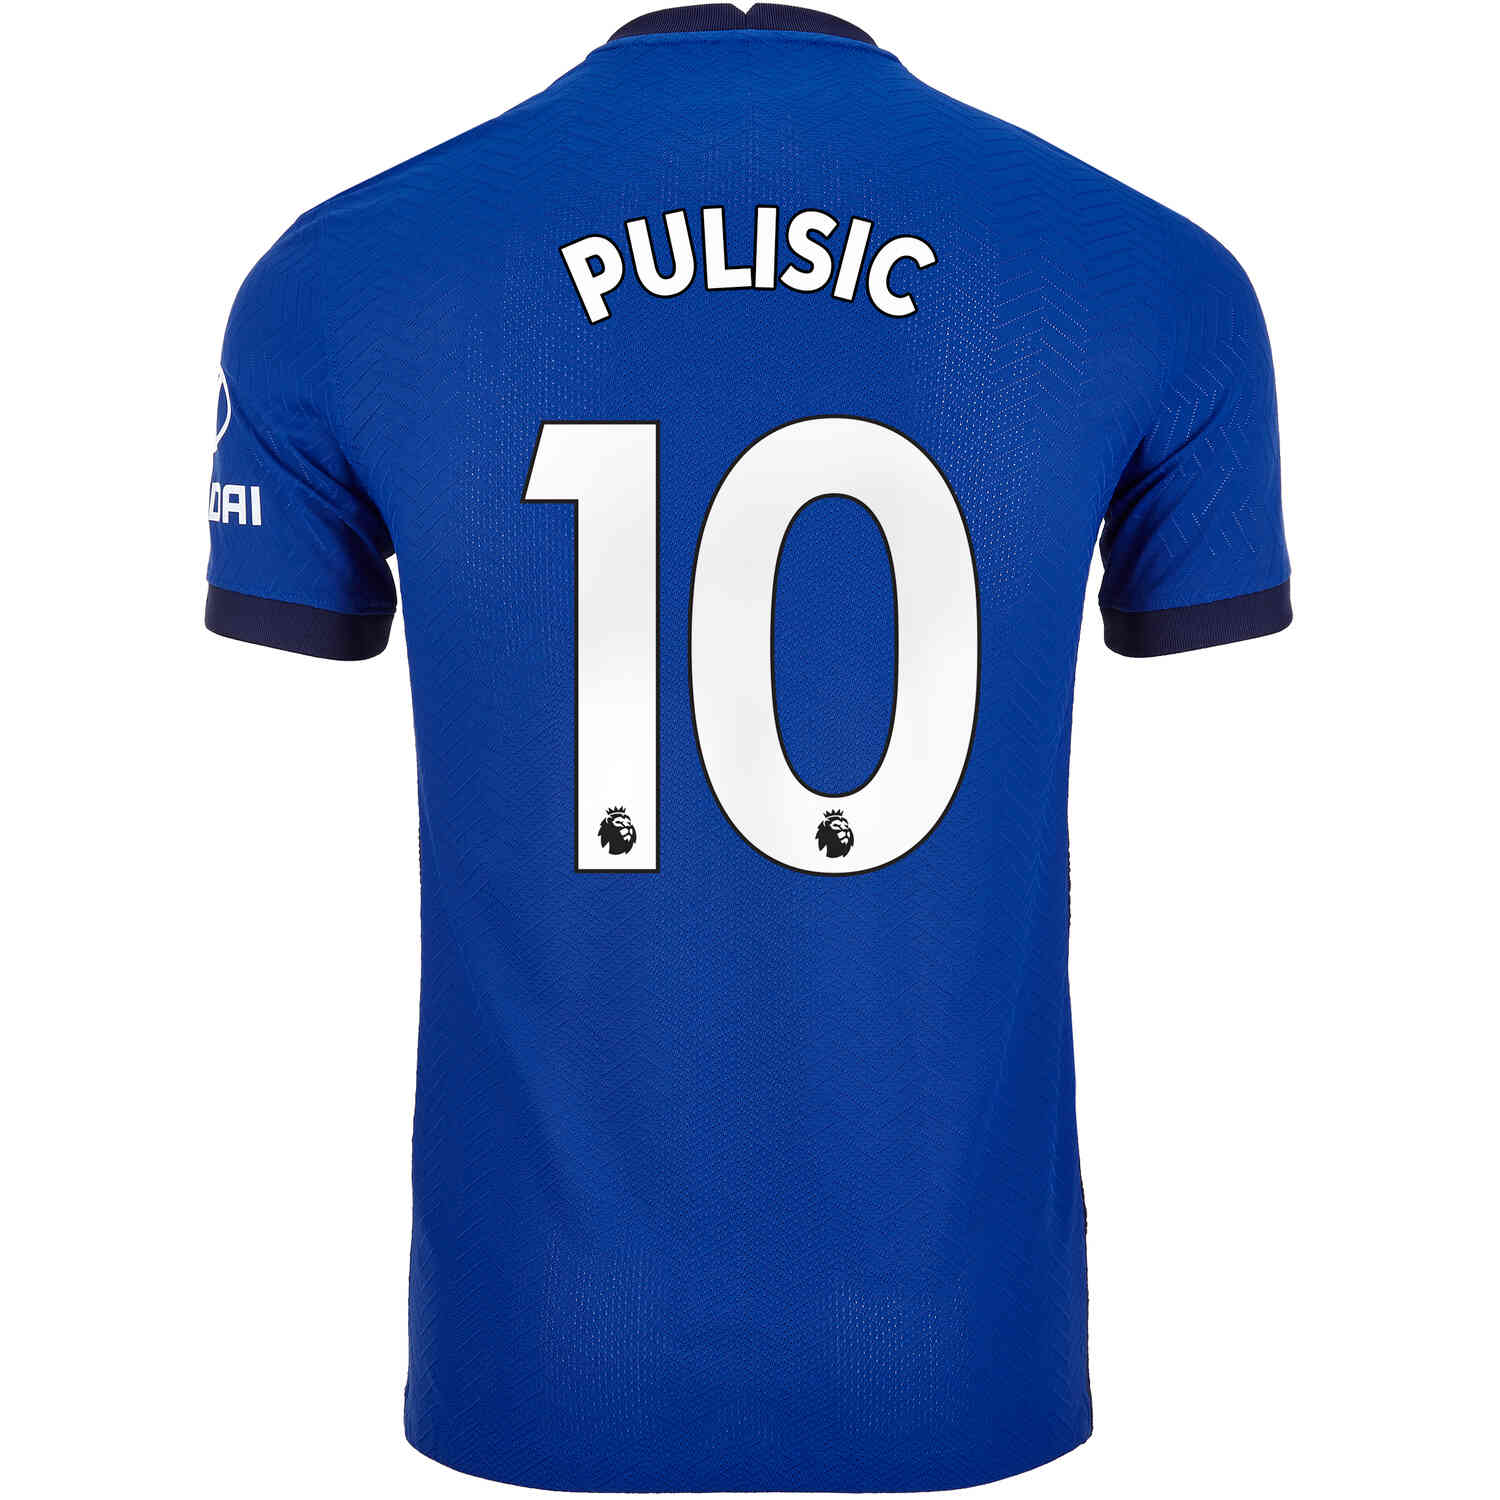 2020/21 Nike Christian Pulisic Chelsea Home Match Jersey - SoccerPro